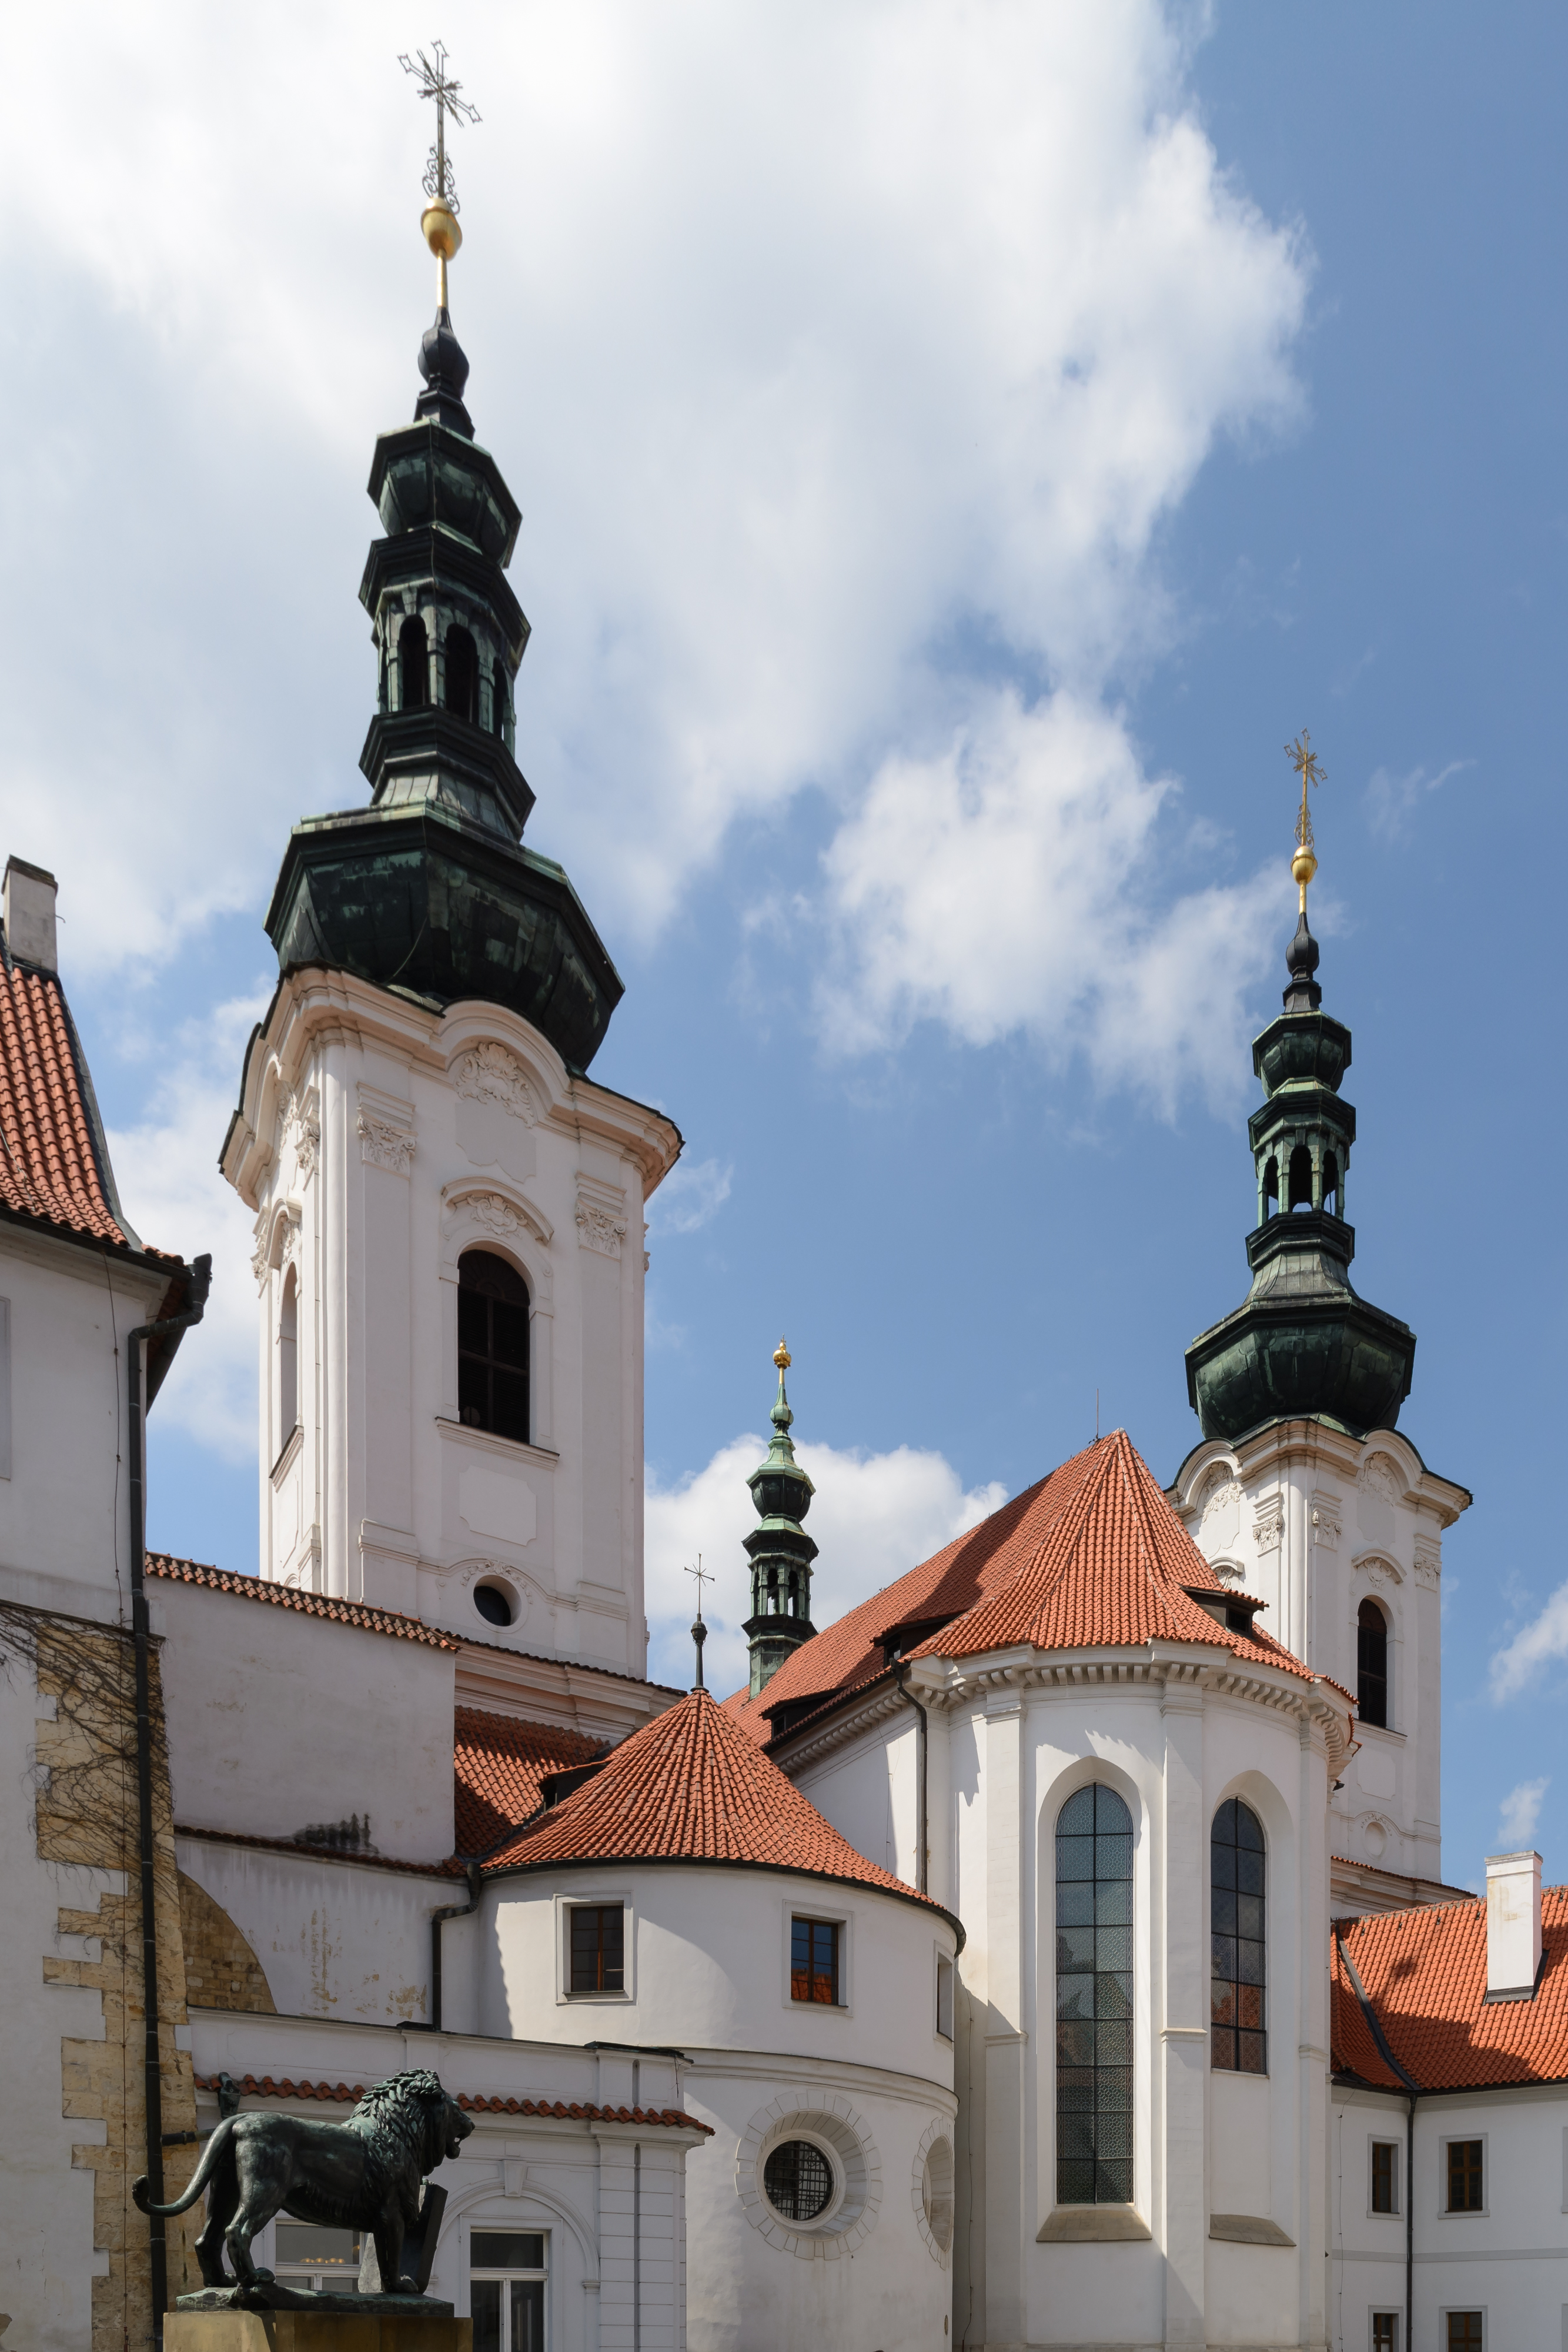 Praha Strahov Monastery Church Towers 01